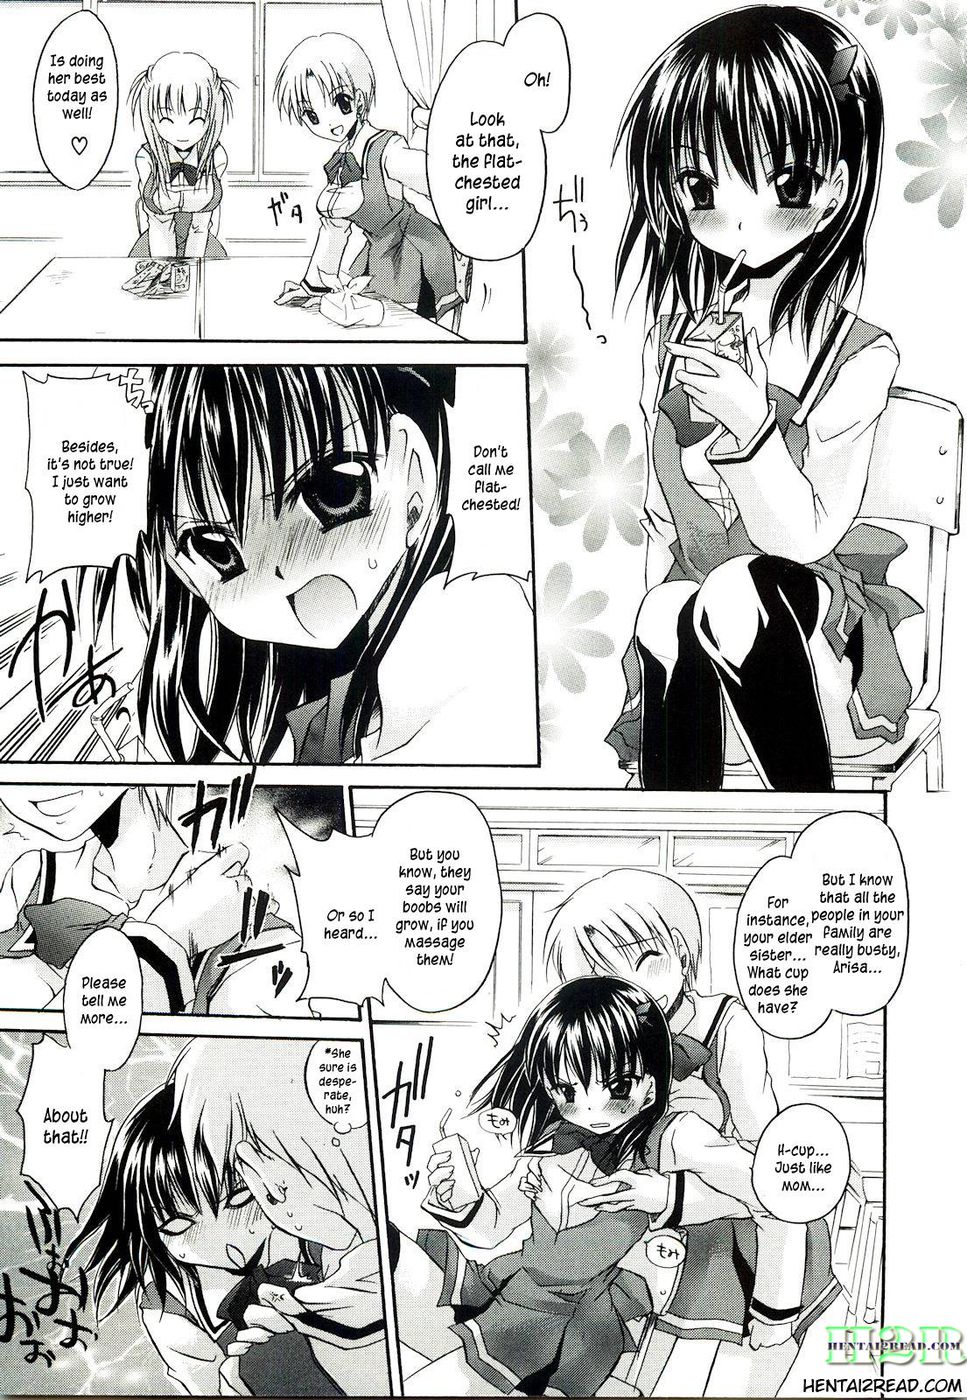 Hentai Manga Comic-Flat-Chested Girl-Read-1